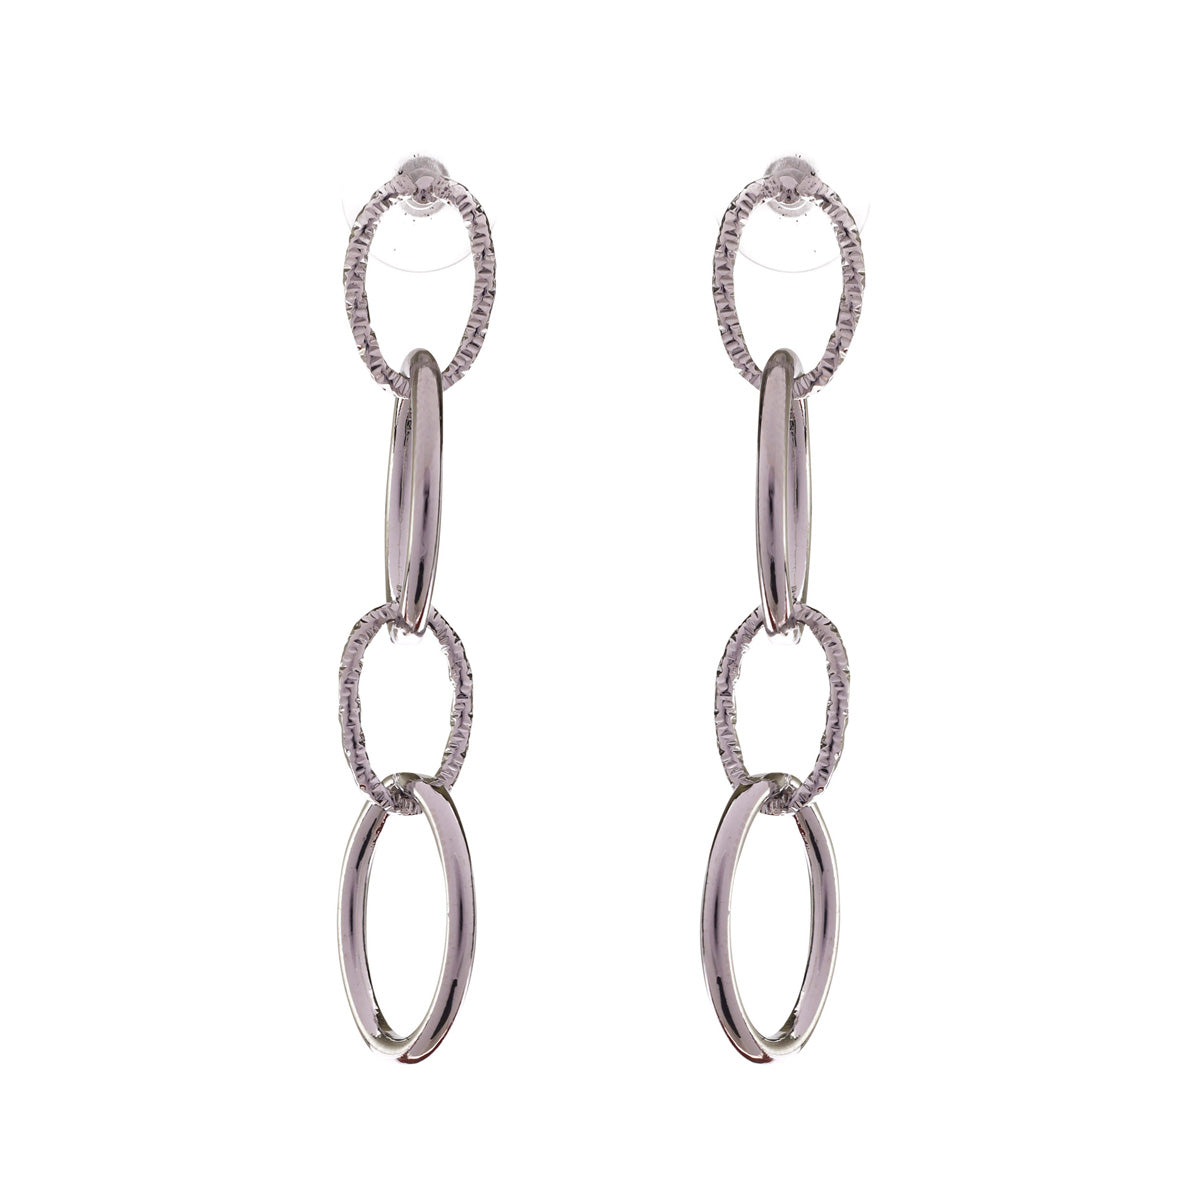 Hanging chain earrings